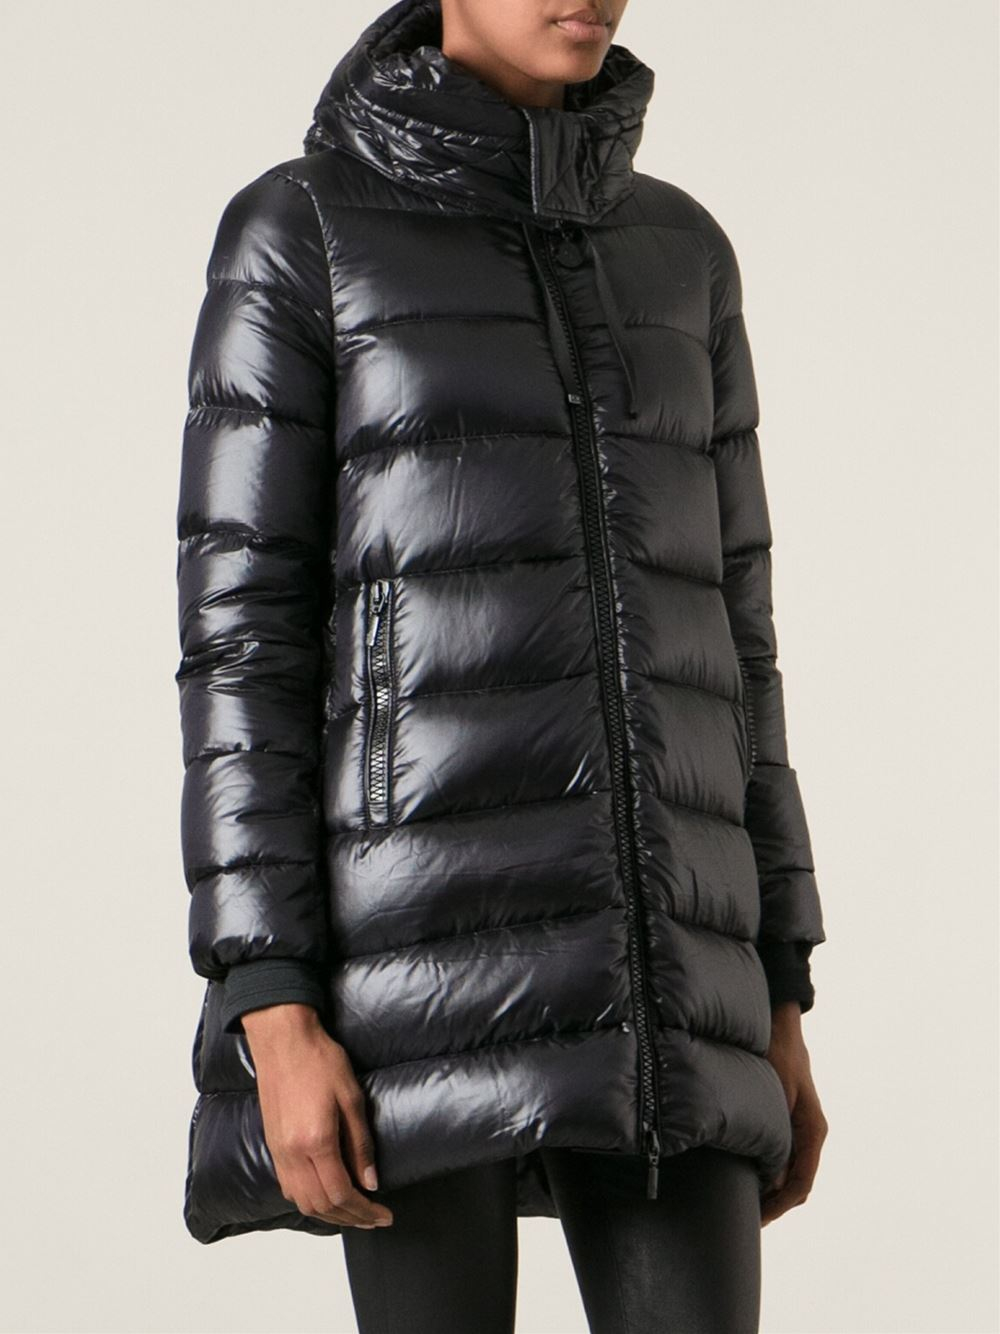 Lyst - Moncler Suyen Padded Jacket in Black